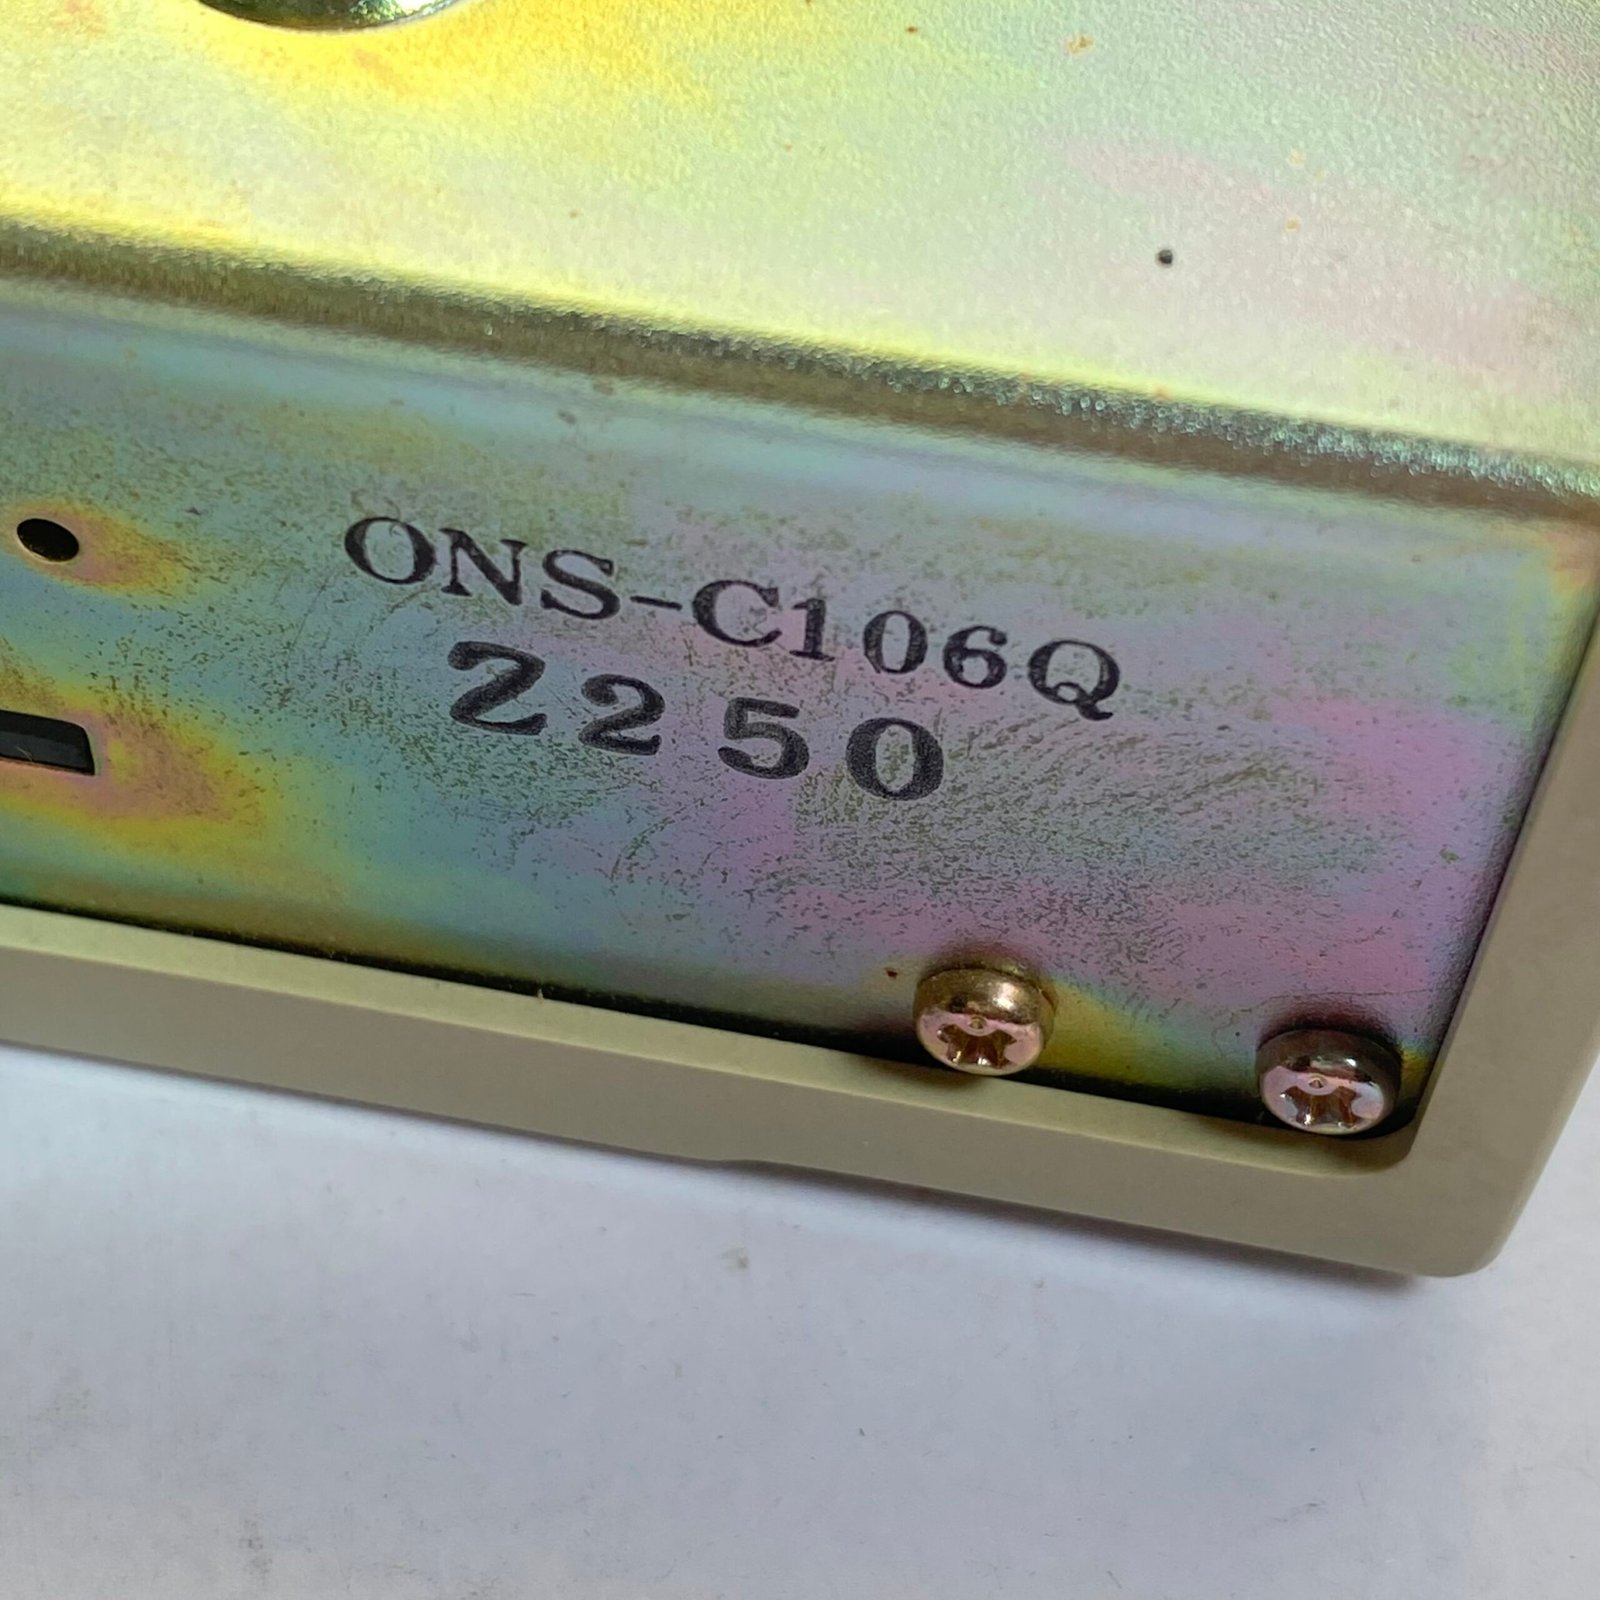 ONS-C106Q (6)